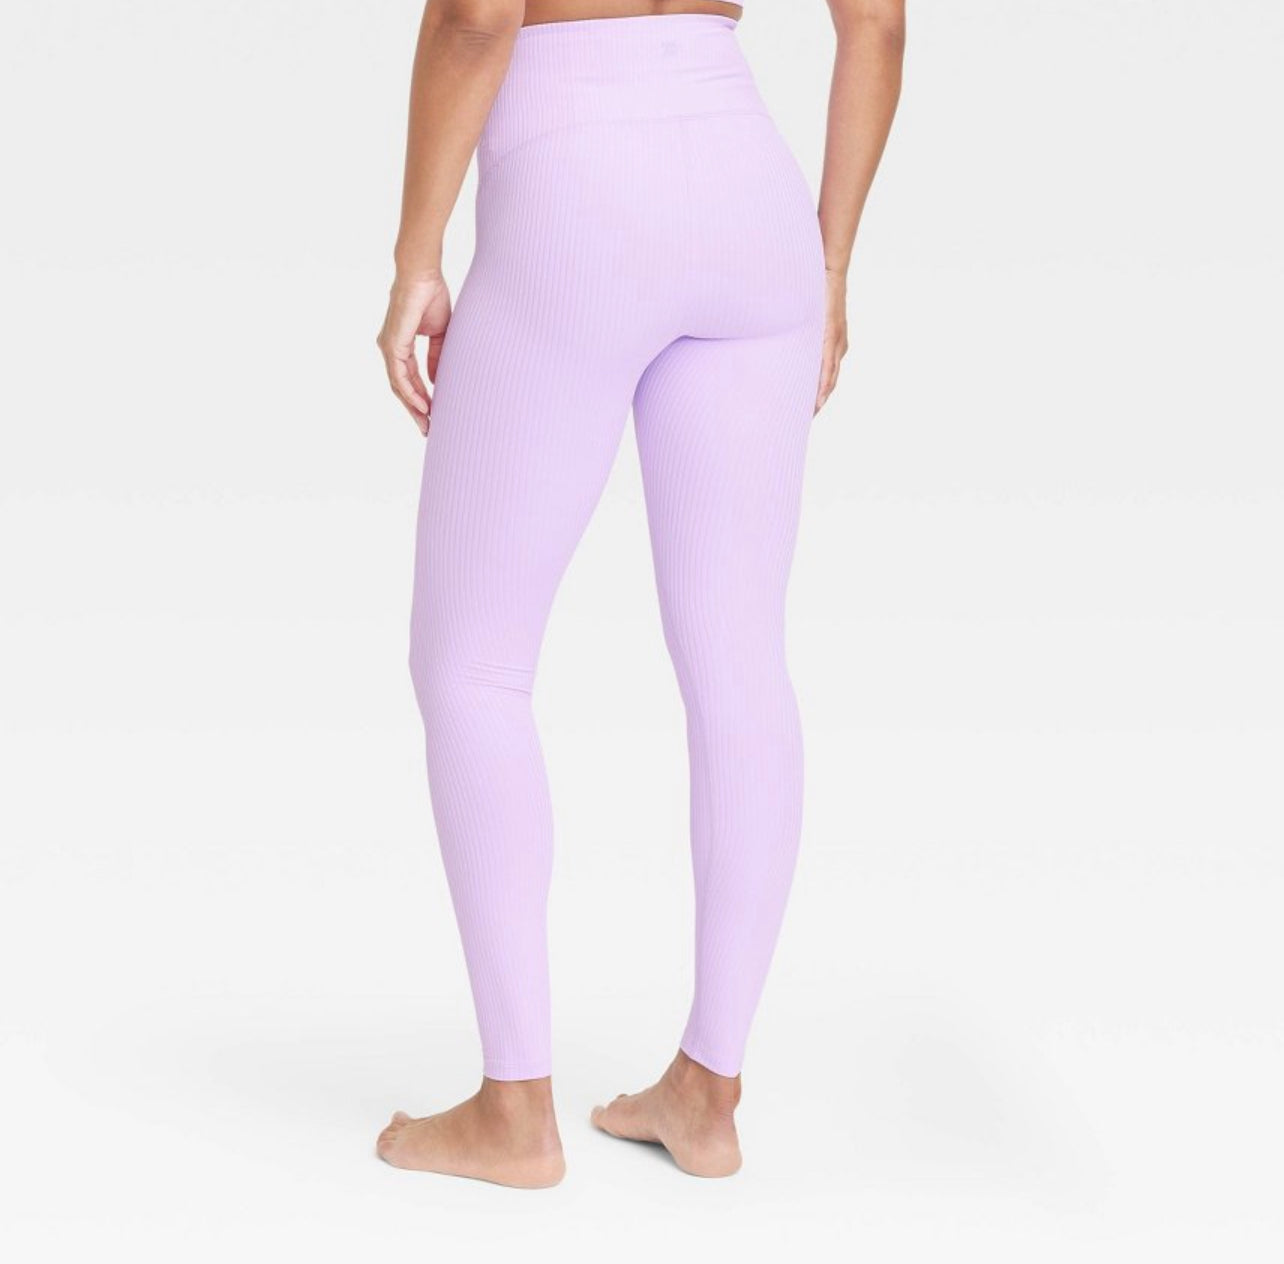 Women's Rib Curvy Leggings - All in Motionm Lilac Purple M